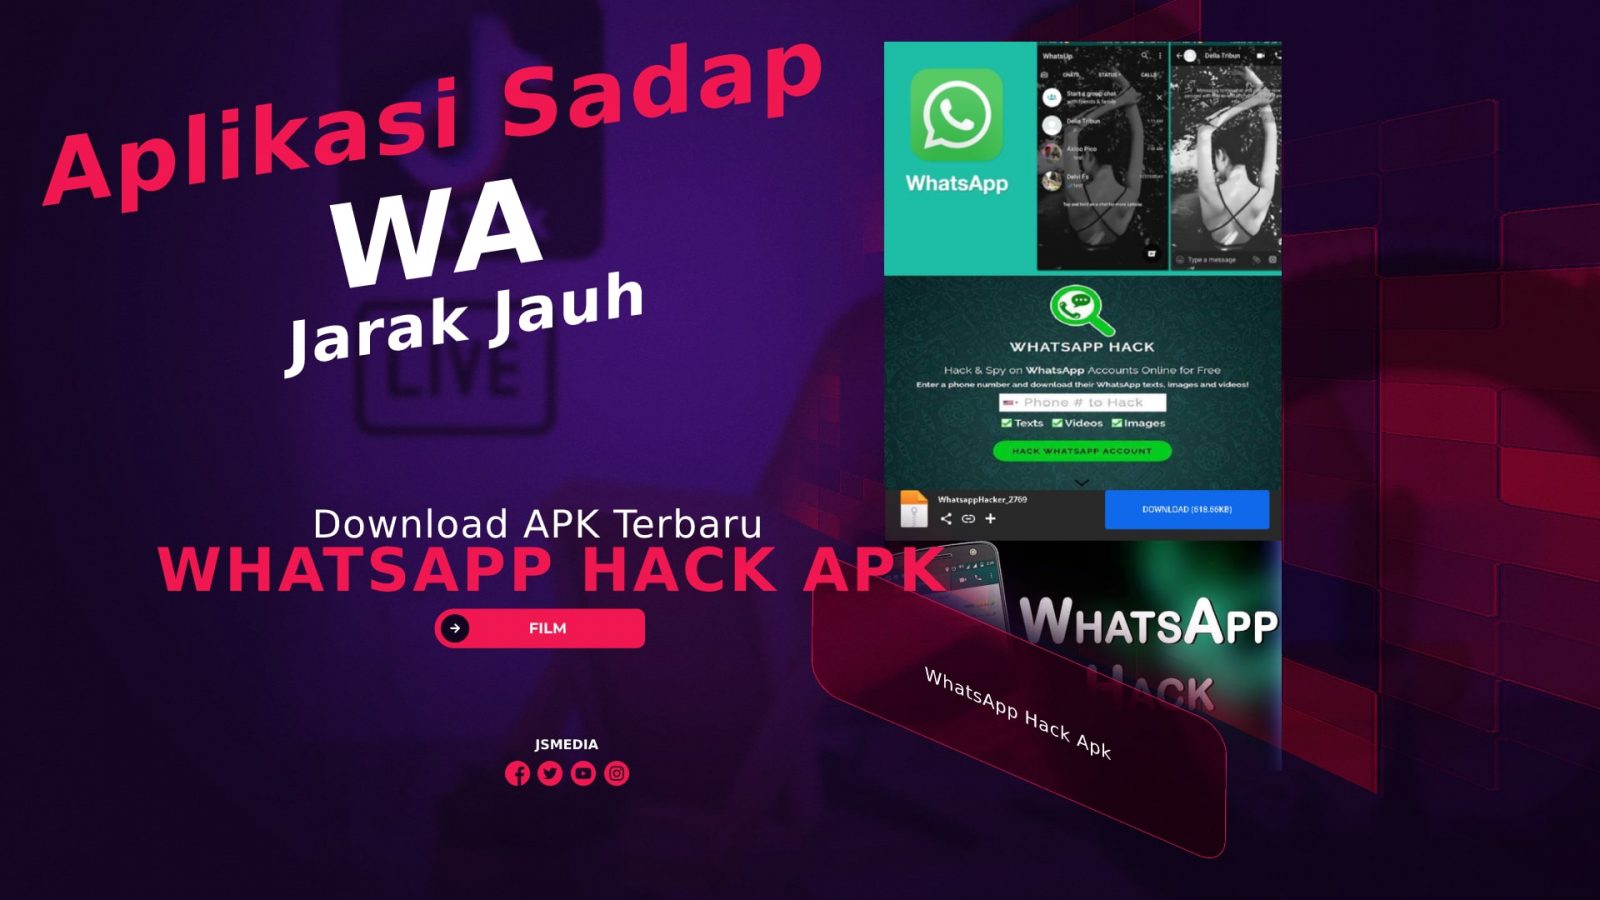 Download WhatsApp Hack Apk, Aplikasi Sadap WA Jarak Jauh